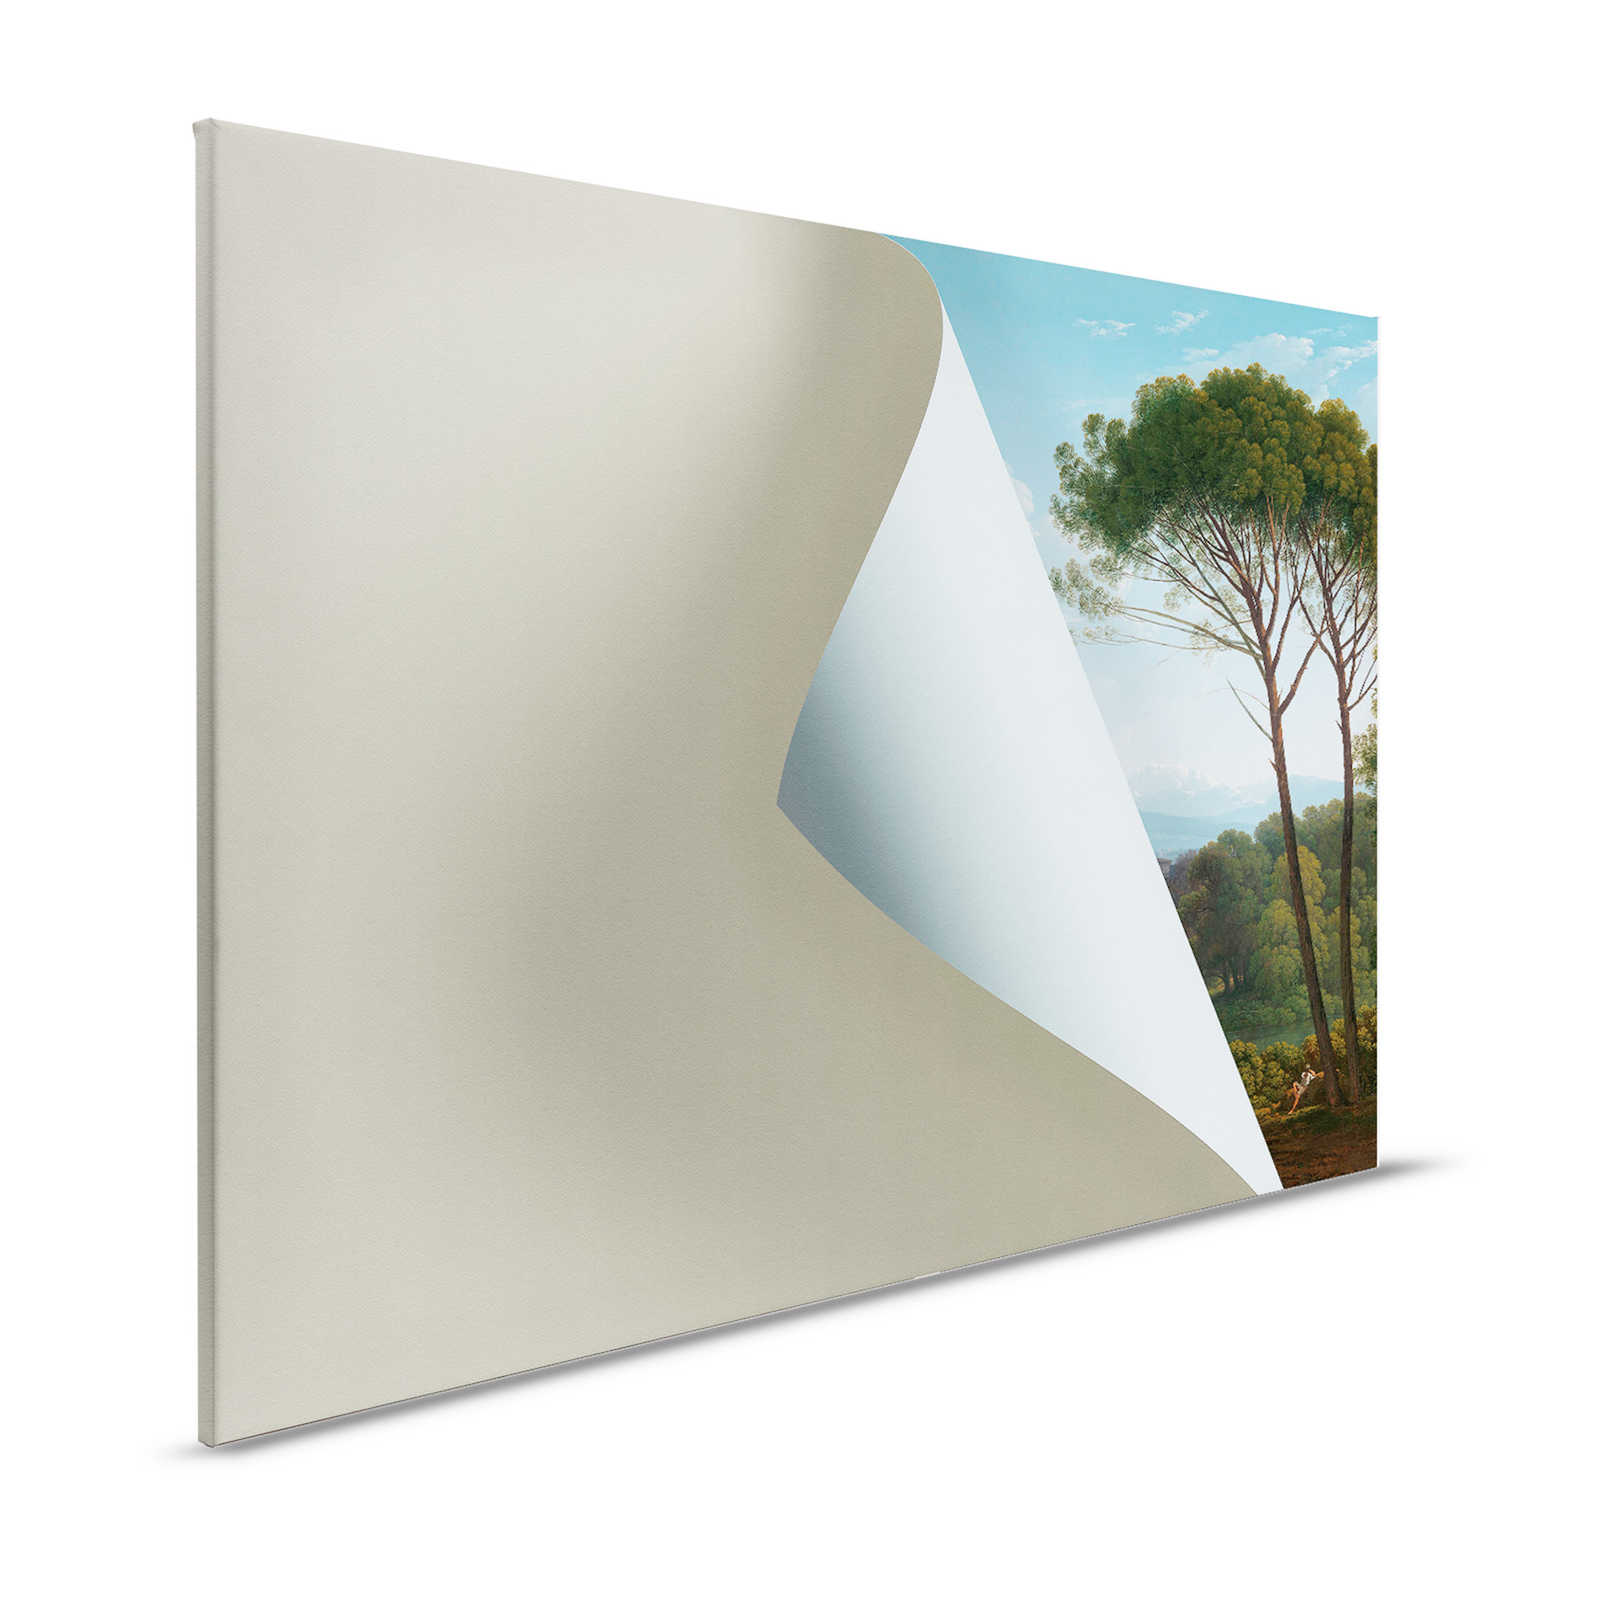 Luoghi nascosti 3 - Albero Quadro su tela paesaggio nascosto - 1,20 m x 0,80 m
